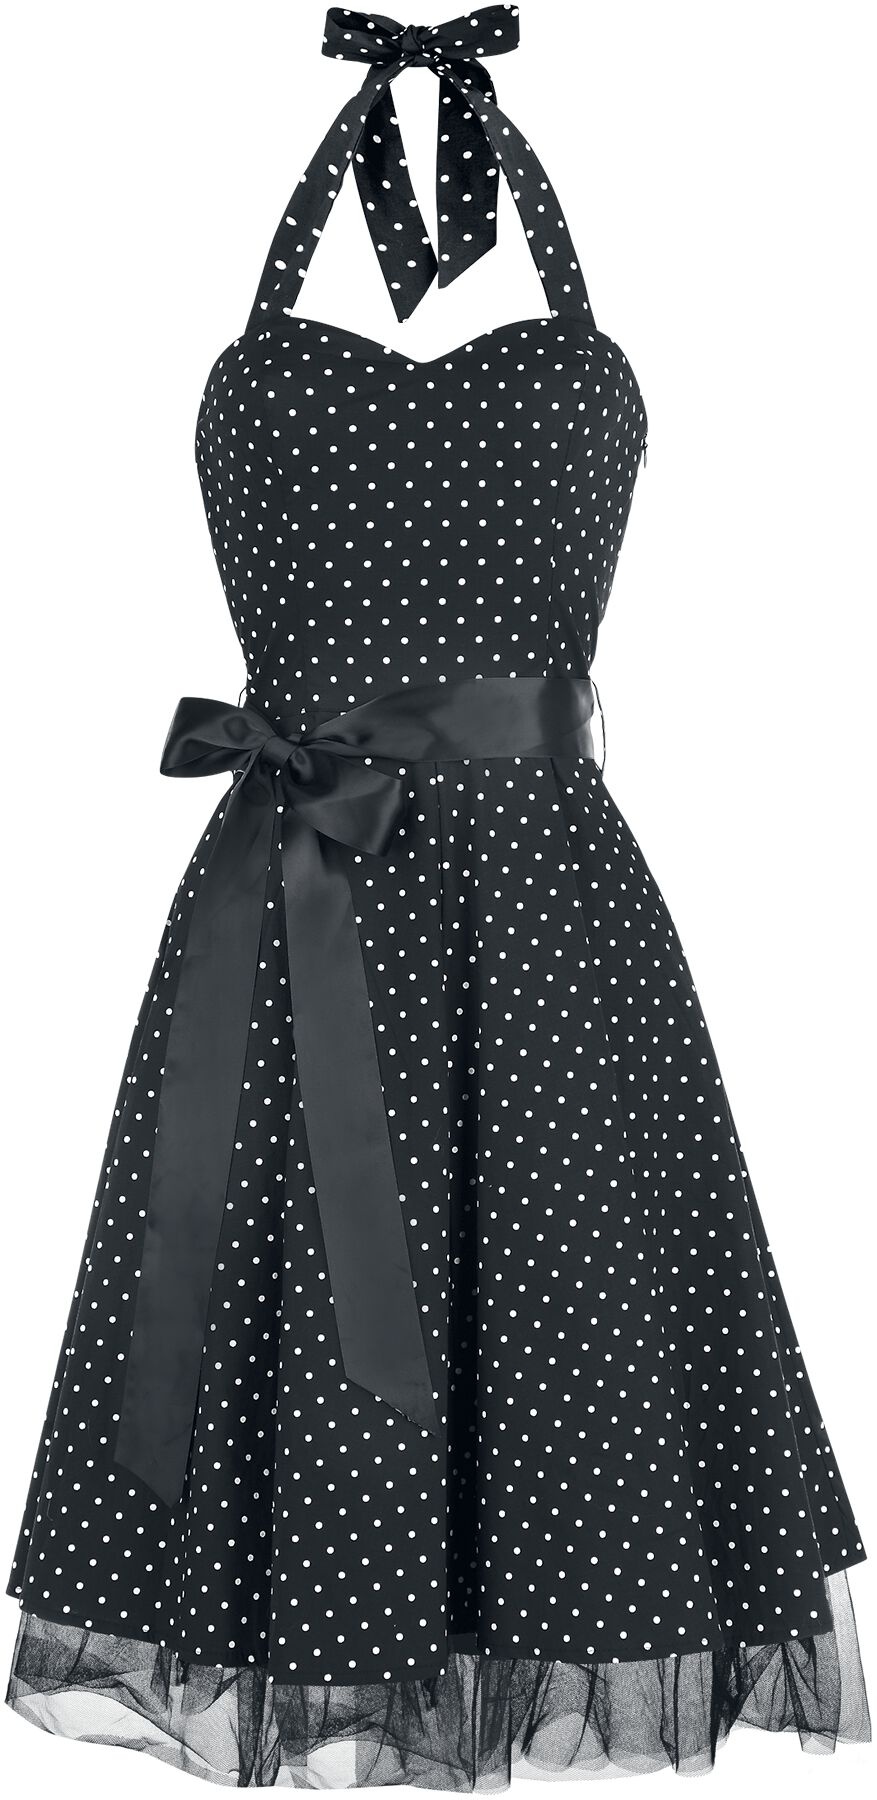 H&R London - Rockabilly Kleid knielang - Small Dot Dress - S bis 5XL - für Damen - Größe 4XL - schwarz - 4XL